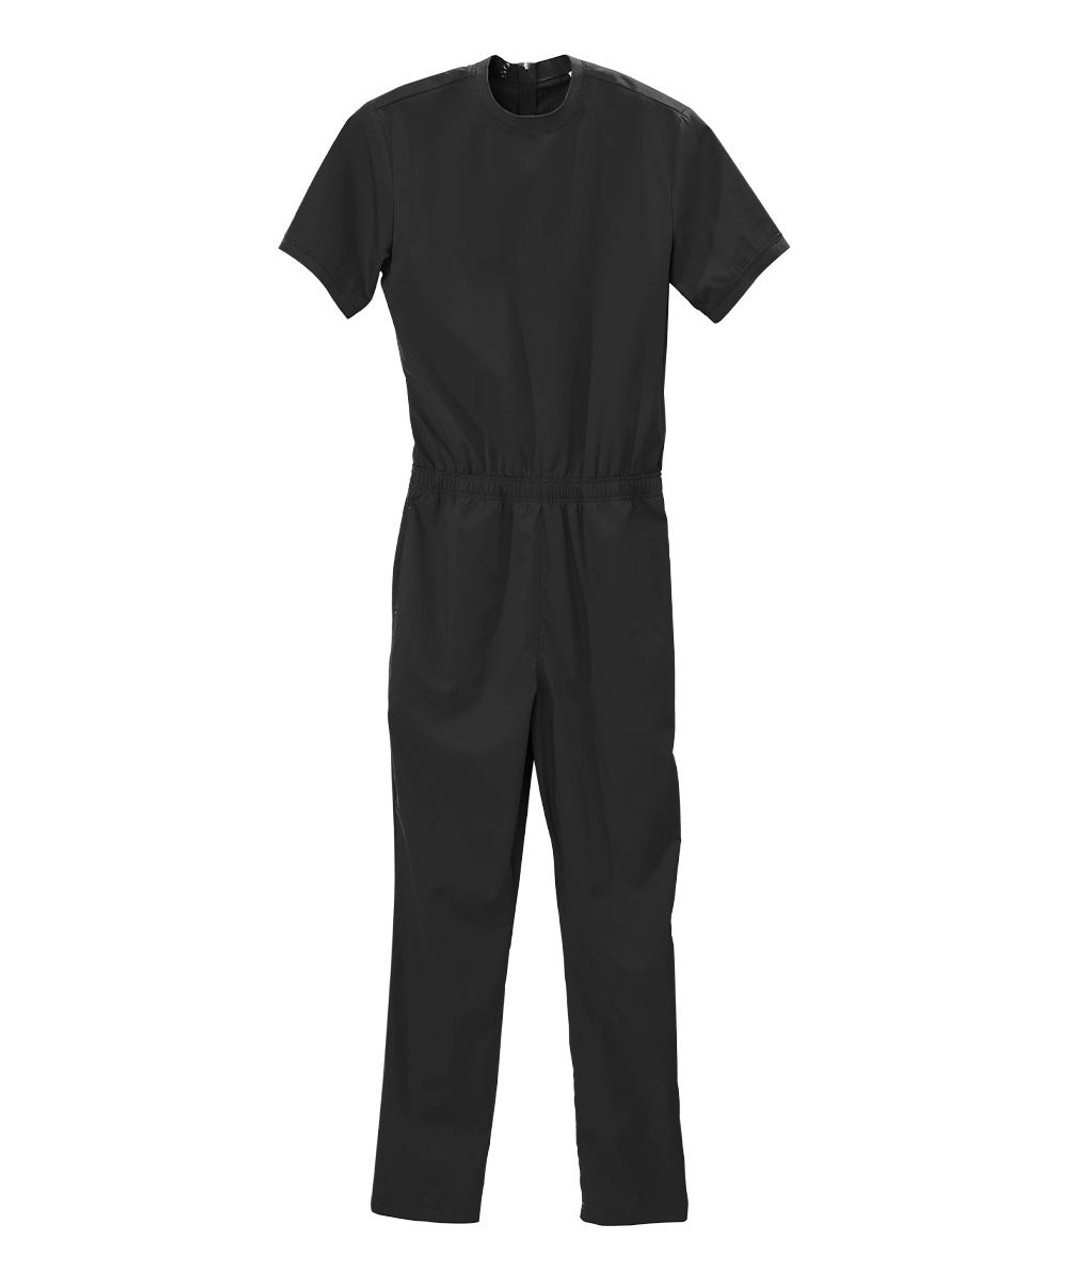 Silverts SV50830 Men's Dementia Alzheimer's Anti Strip Jumpsuit Black, Size=L, SV50830-BLK-L